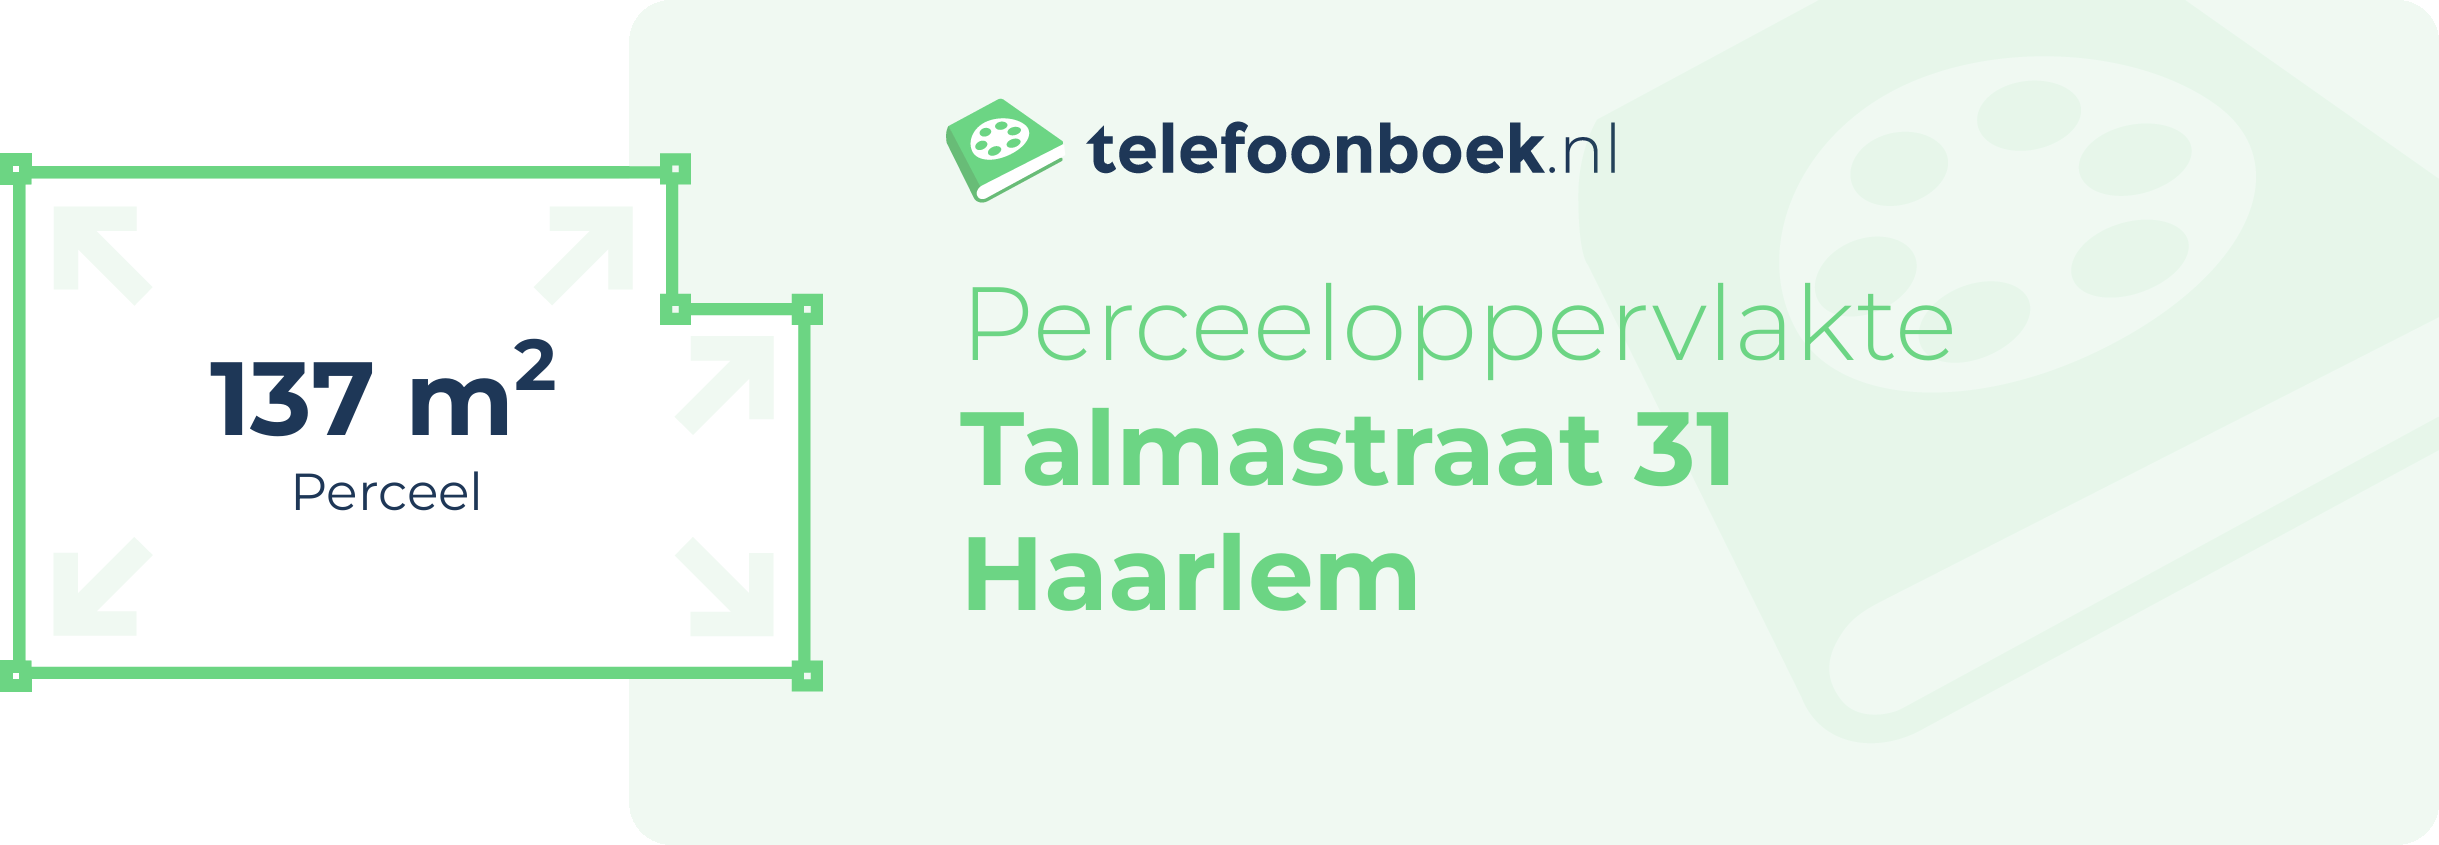 Perceeloppervlakte Talmastraat 31 Haarlem